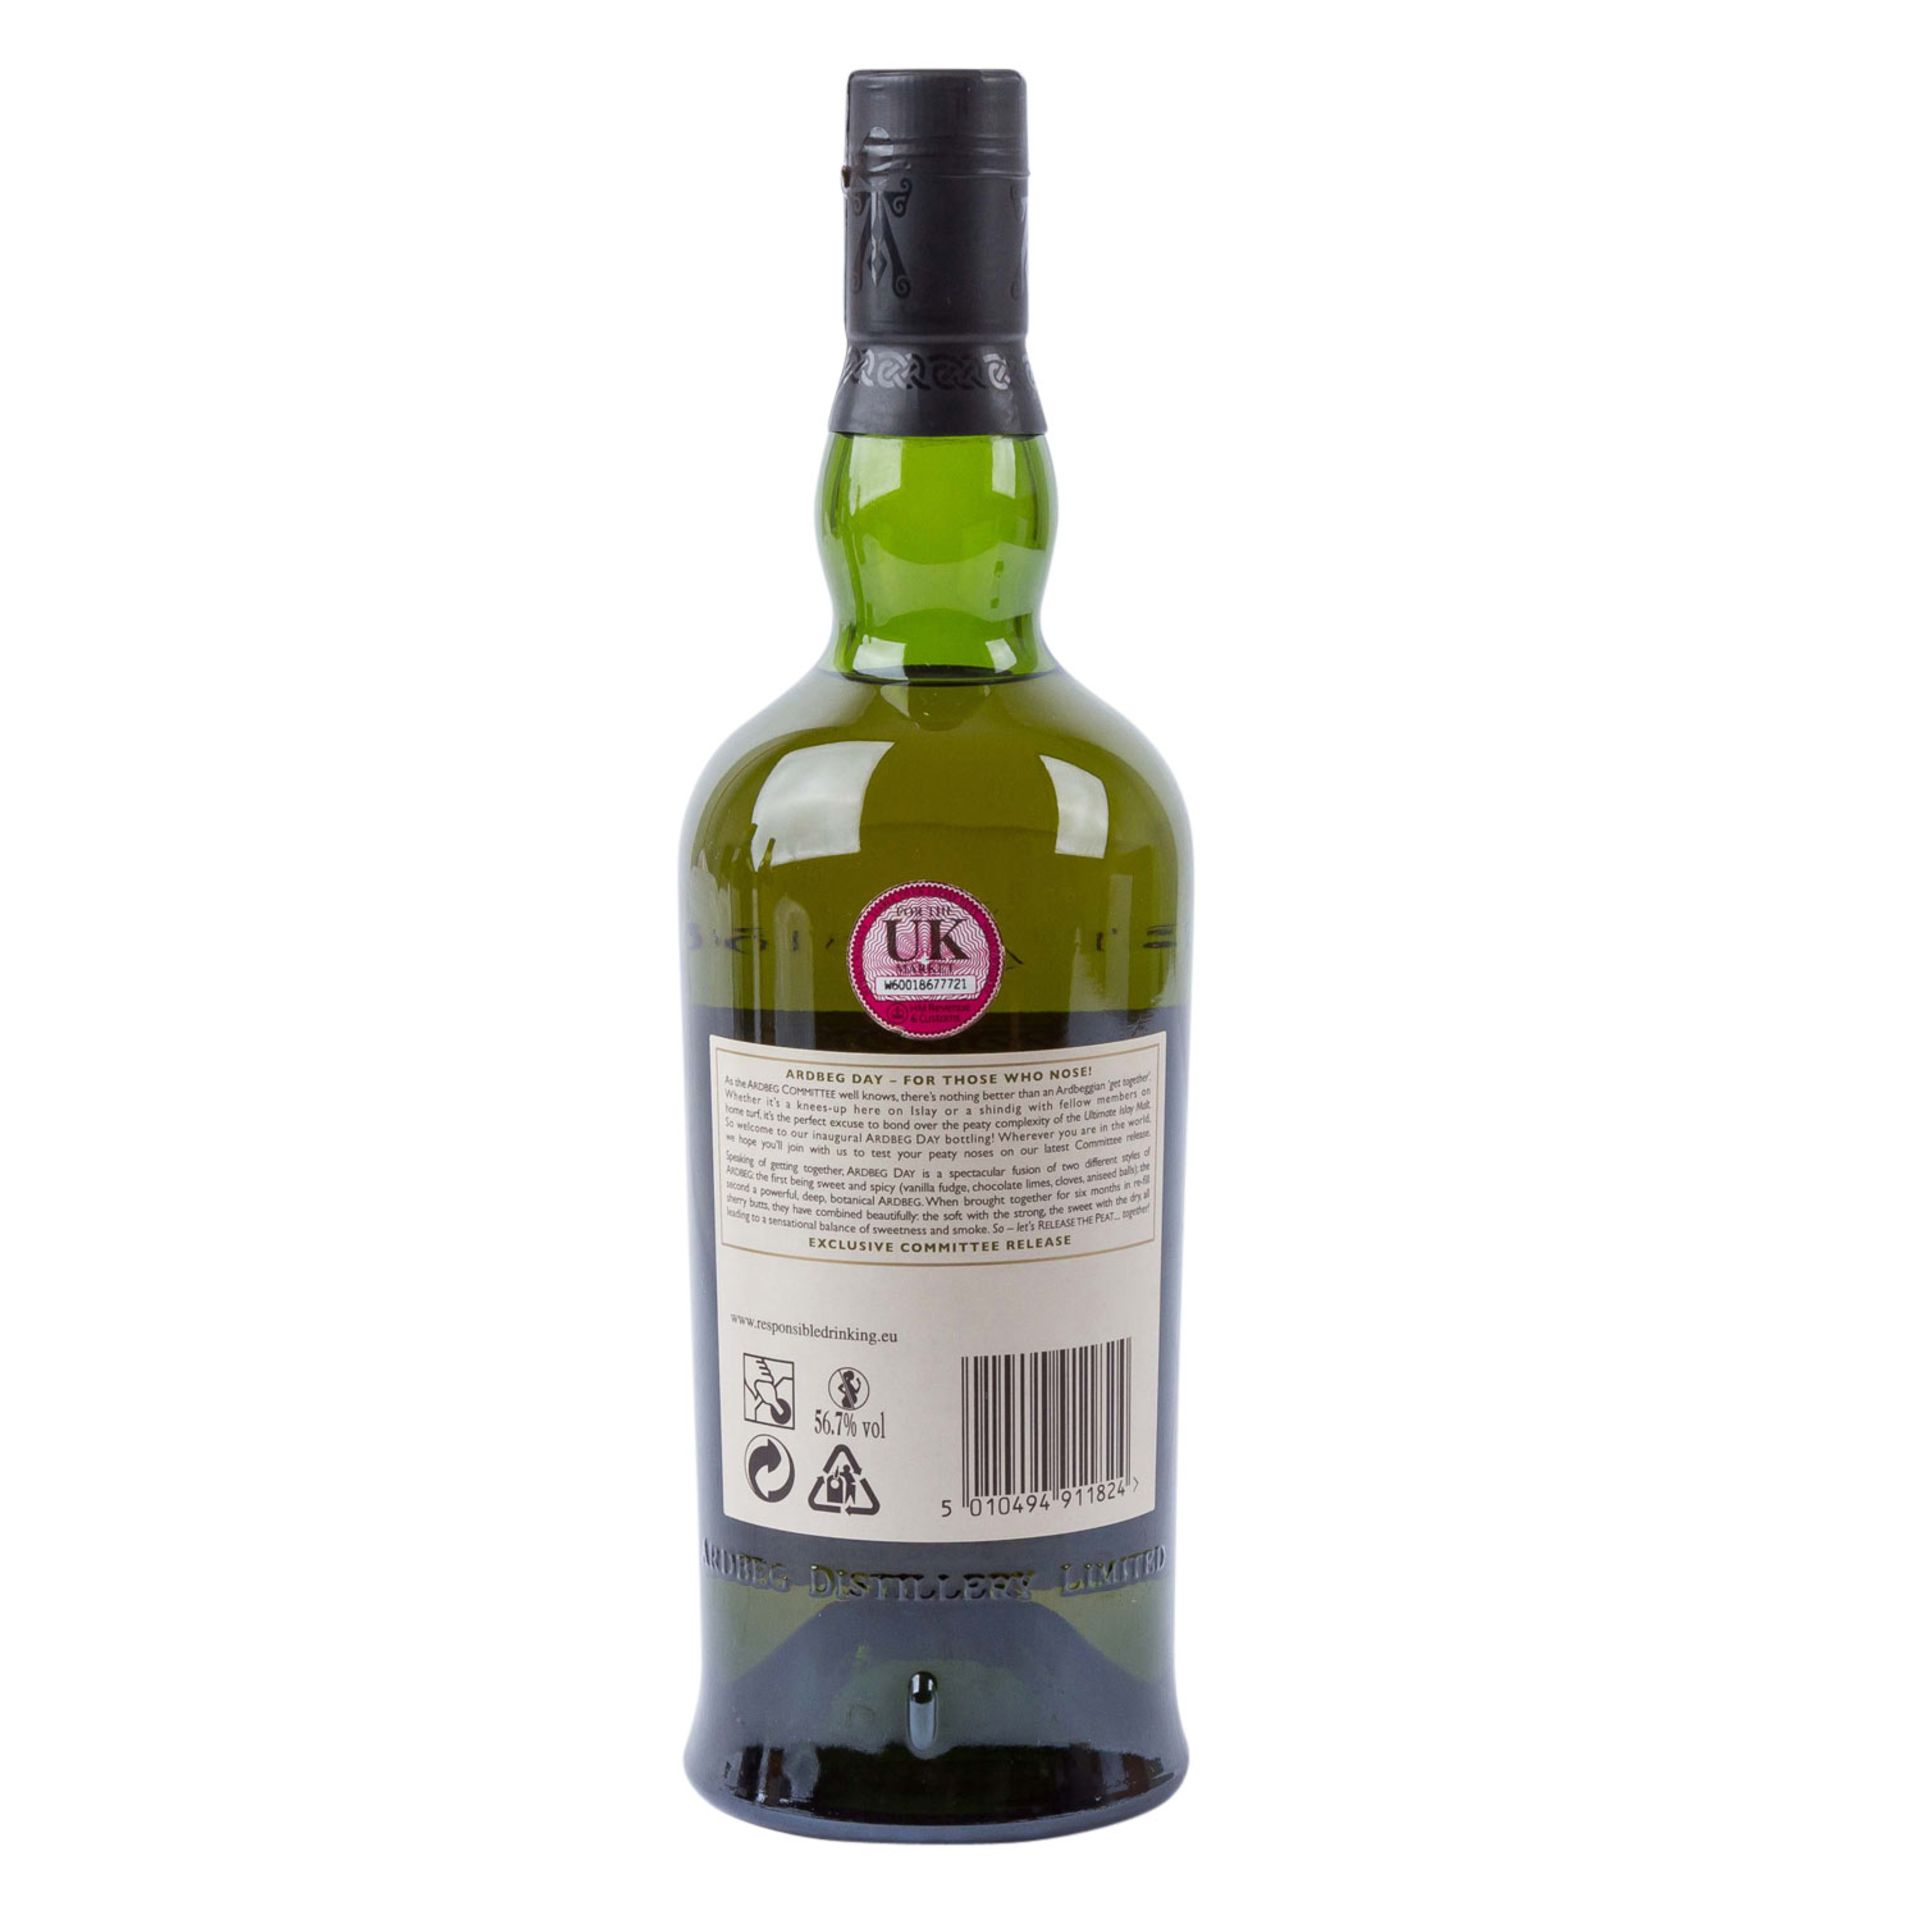 ARDBEG DAY Islay Single Malt Scotch Whisky 2012 - Image 2 of 3